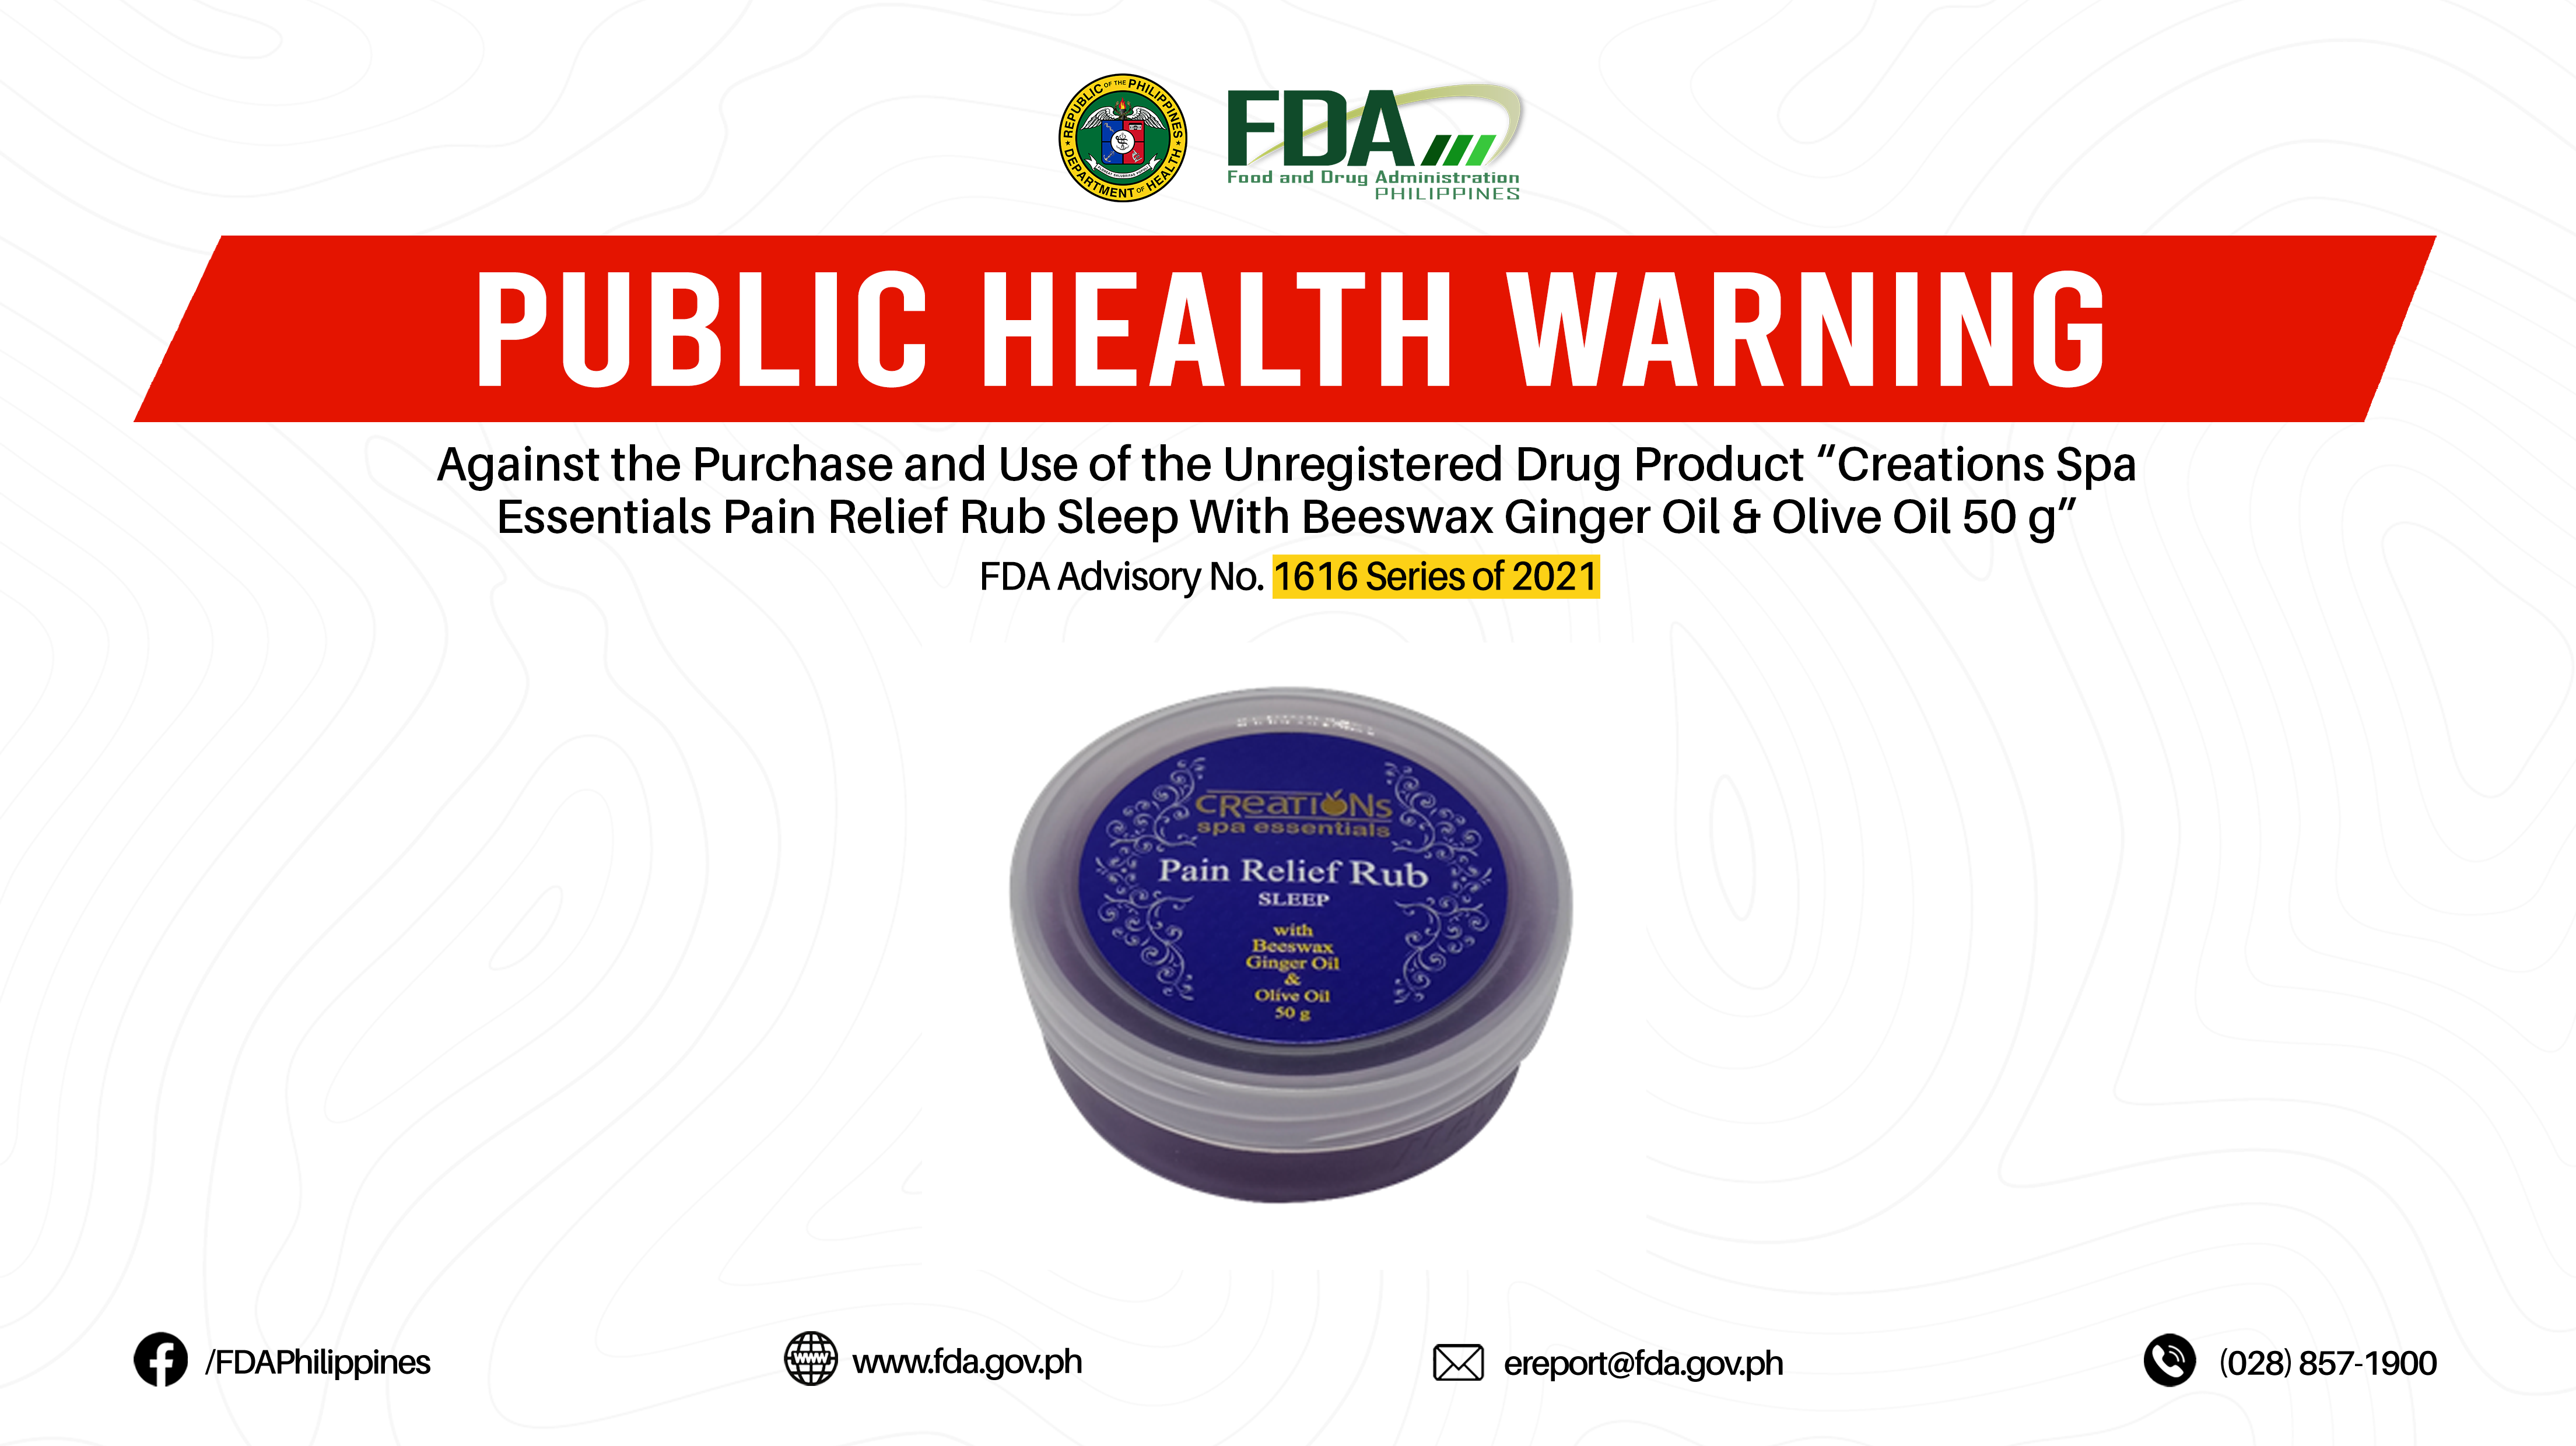 https://www.fda.gov.ph/wp-content/uploads/2021/07/FDA-Advisory-2021-1616.png